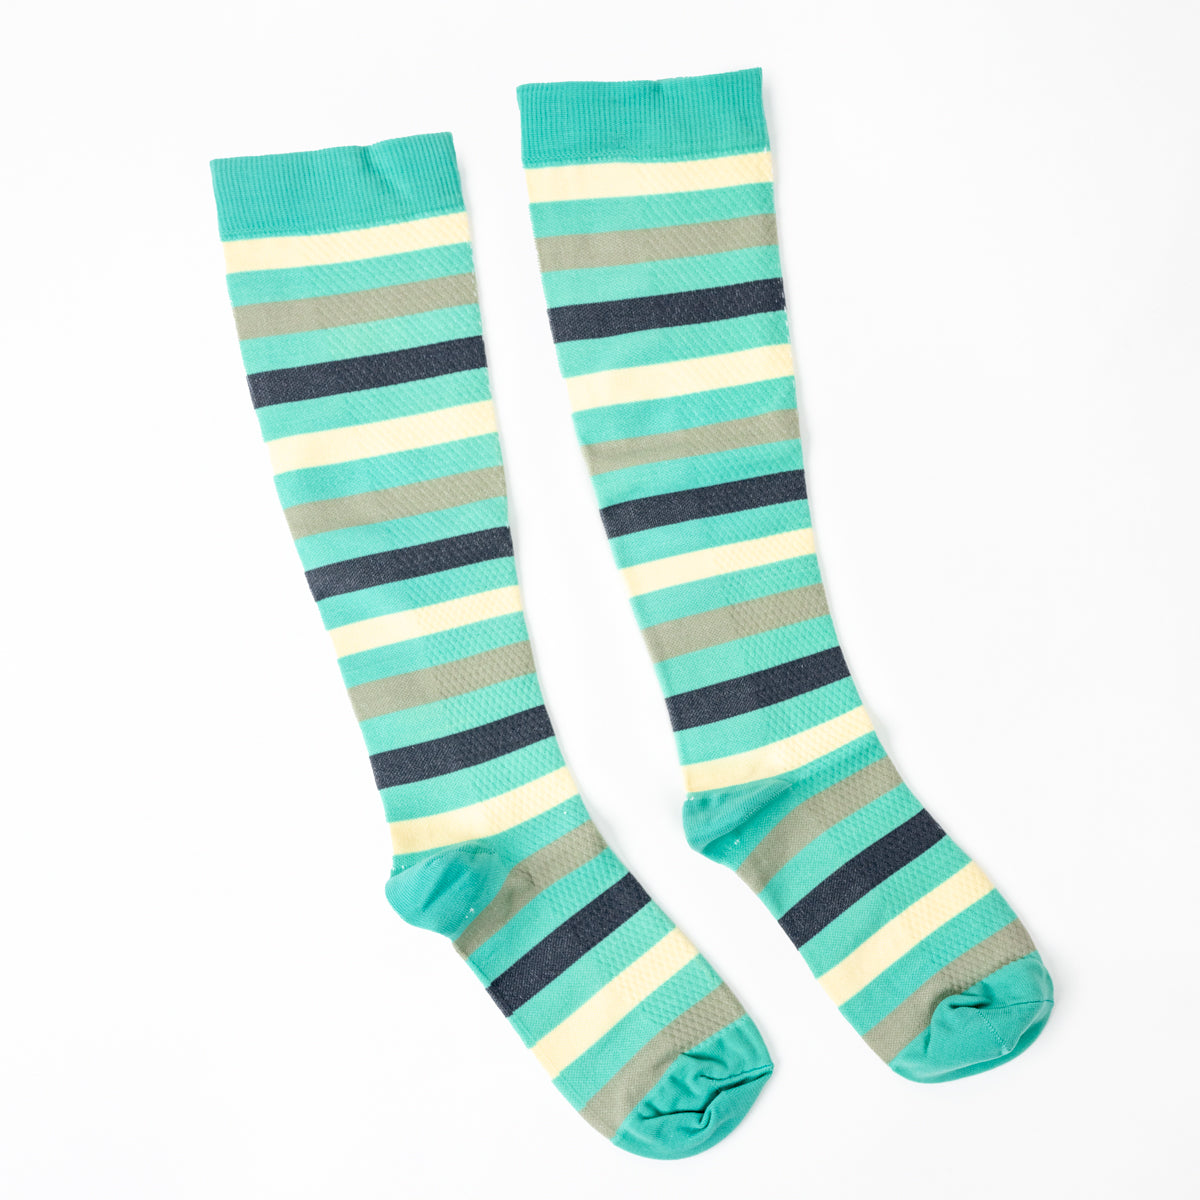 Blue Striped Compression Socks